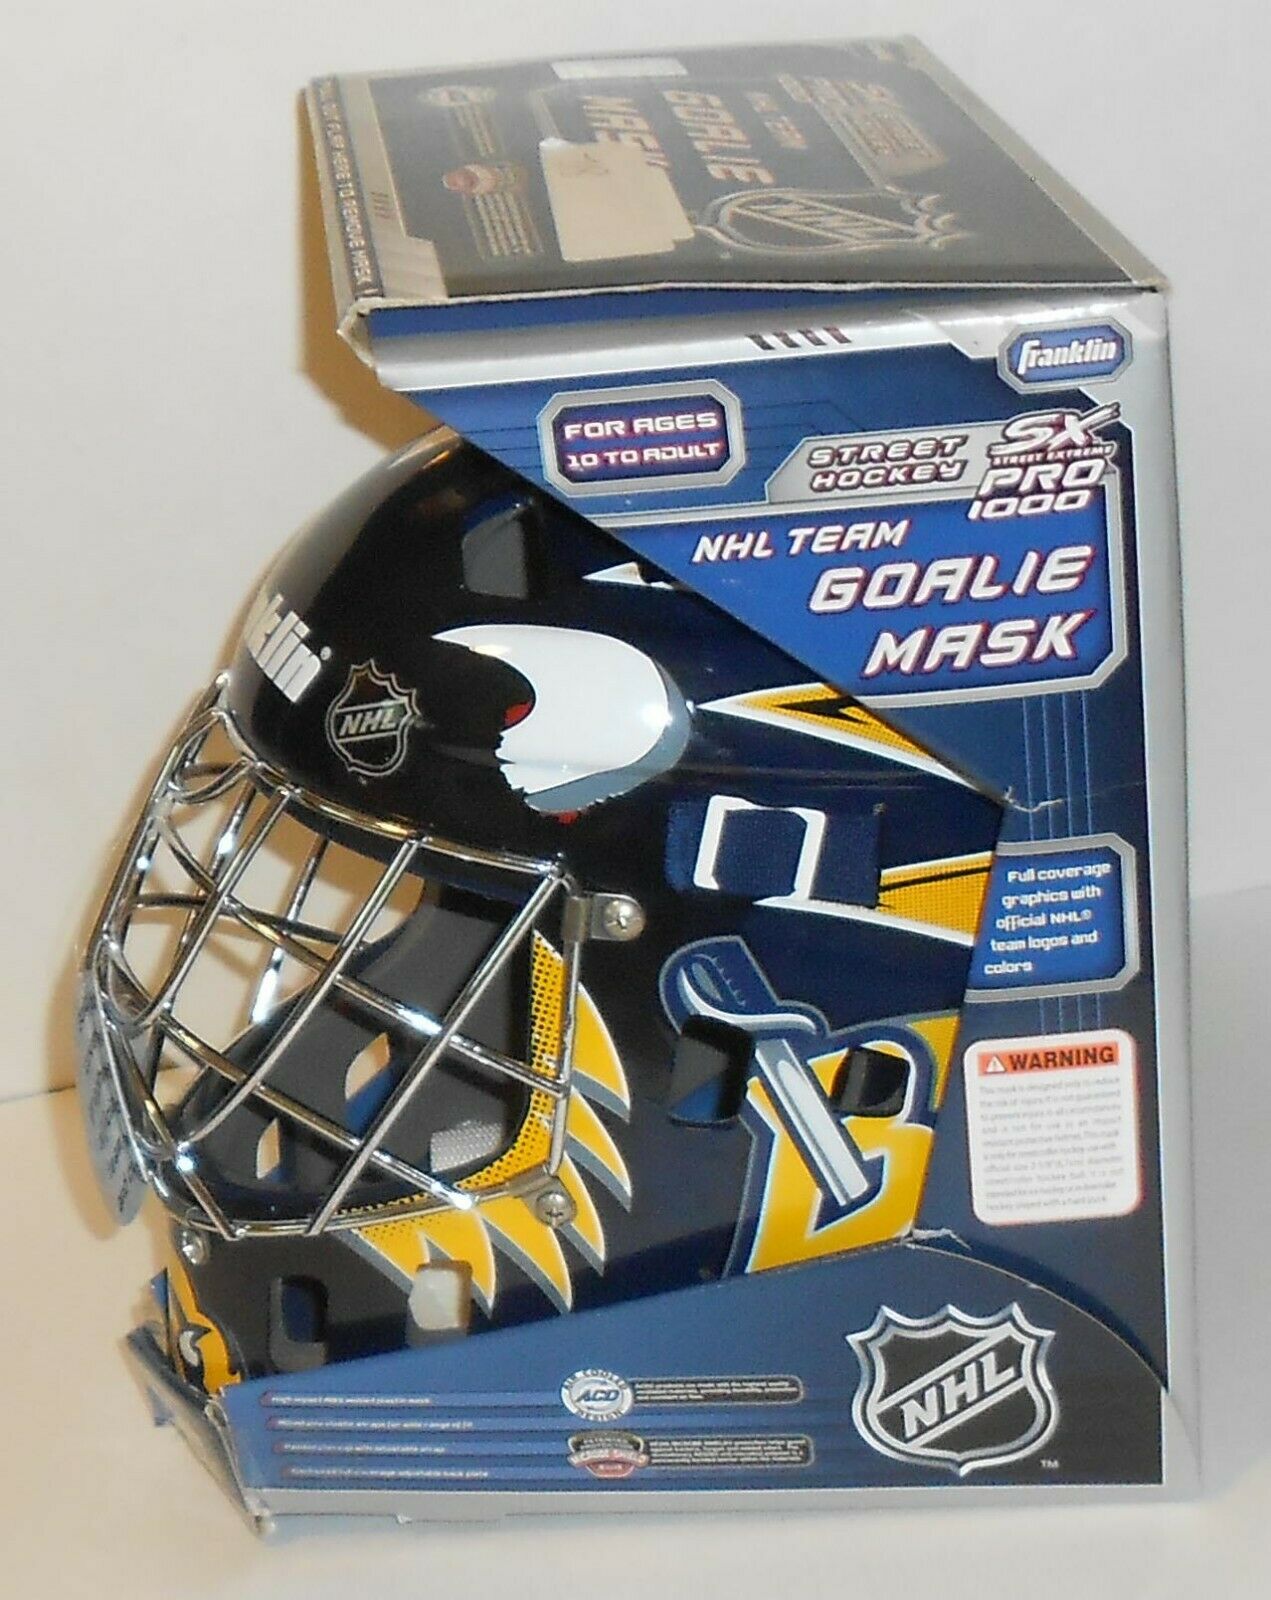 Franklin 5x Street Extreme Pro 1000 Hockey Buffalo Sabres Nhl Goalie Mask New!